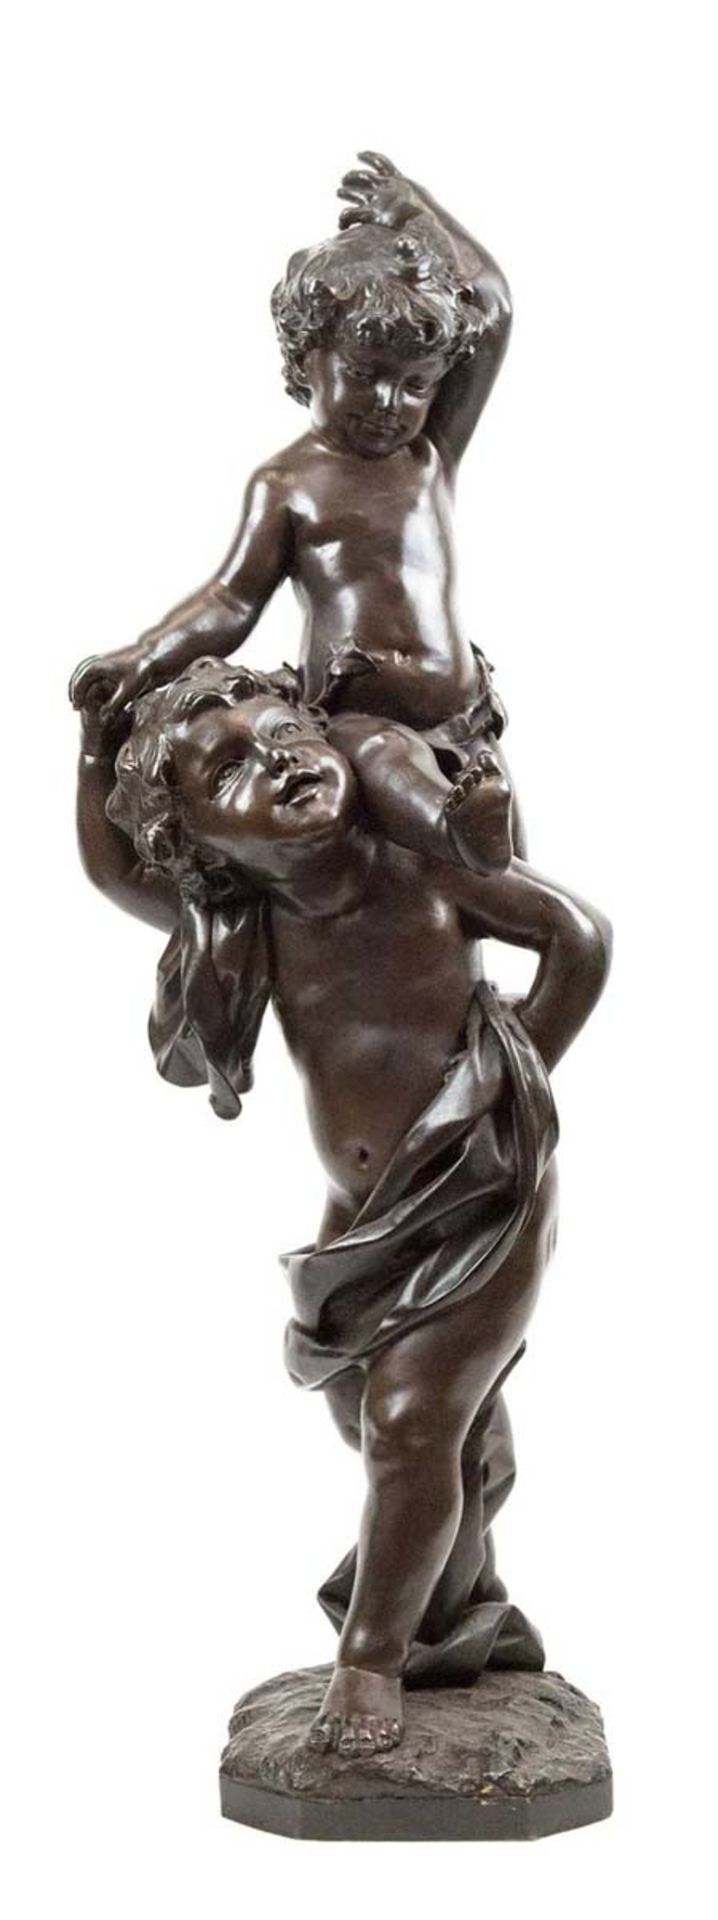 Große Bronze-Figurengruppe nach Moreau, Auguste 1834 Dijon- 1917 Paris) "